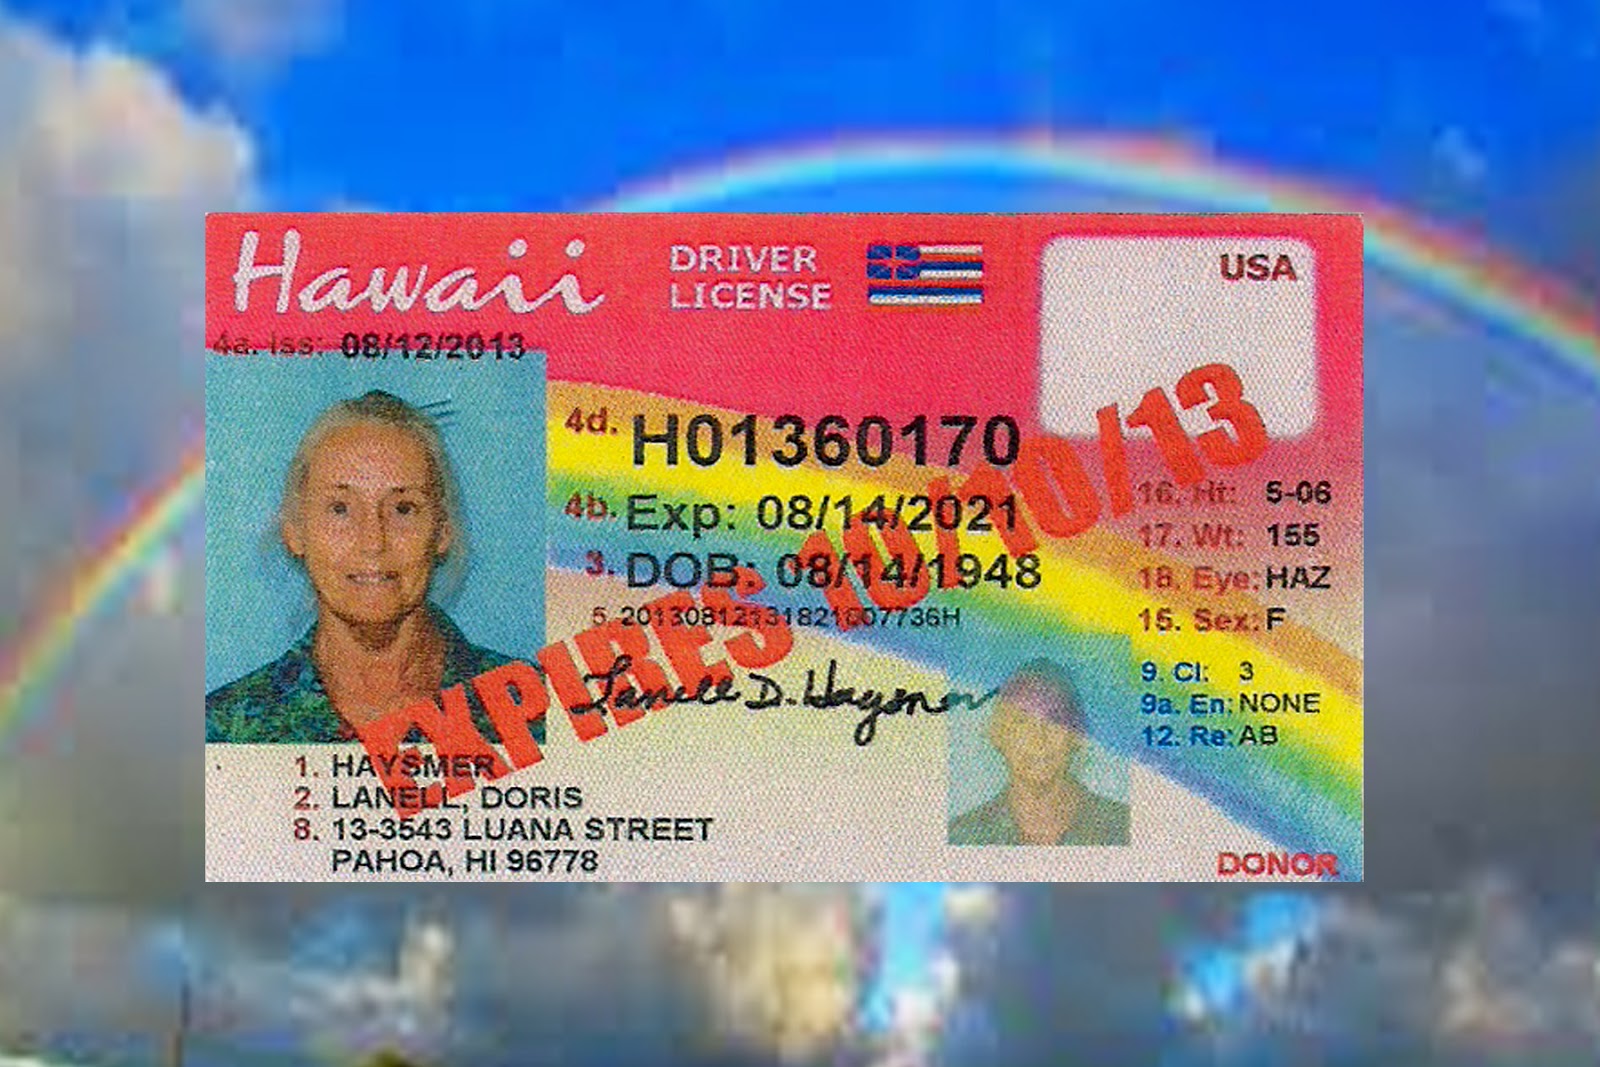 hawaii kingdom drivers license